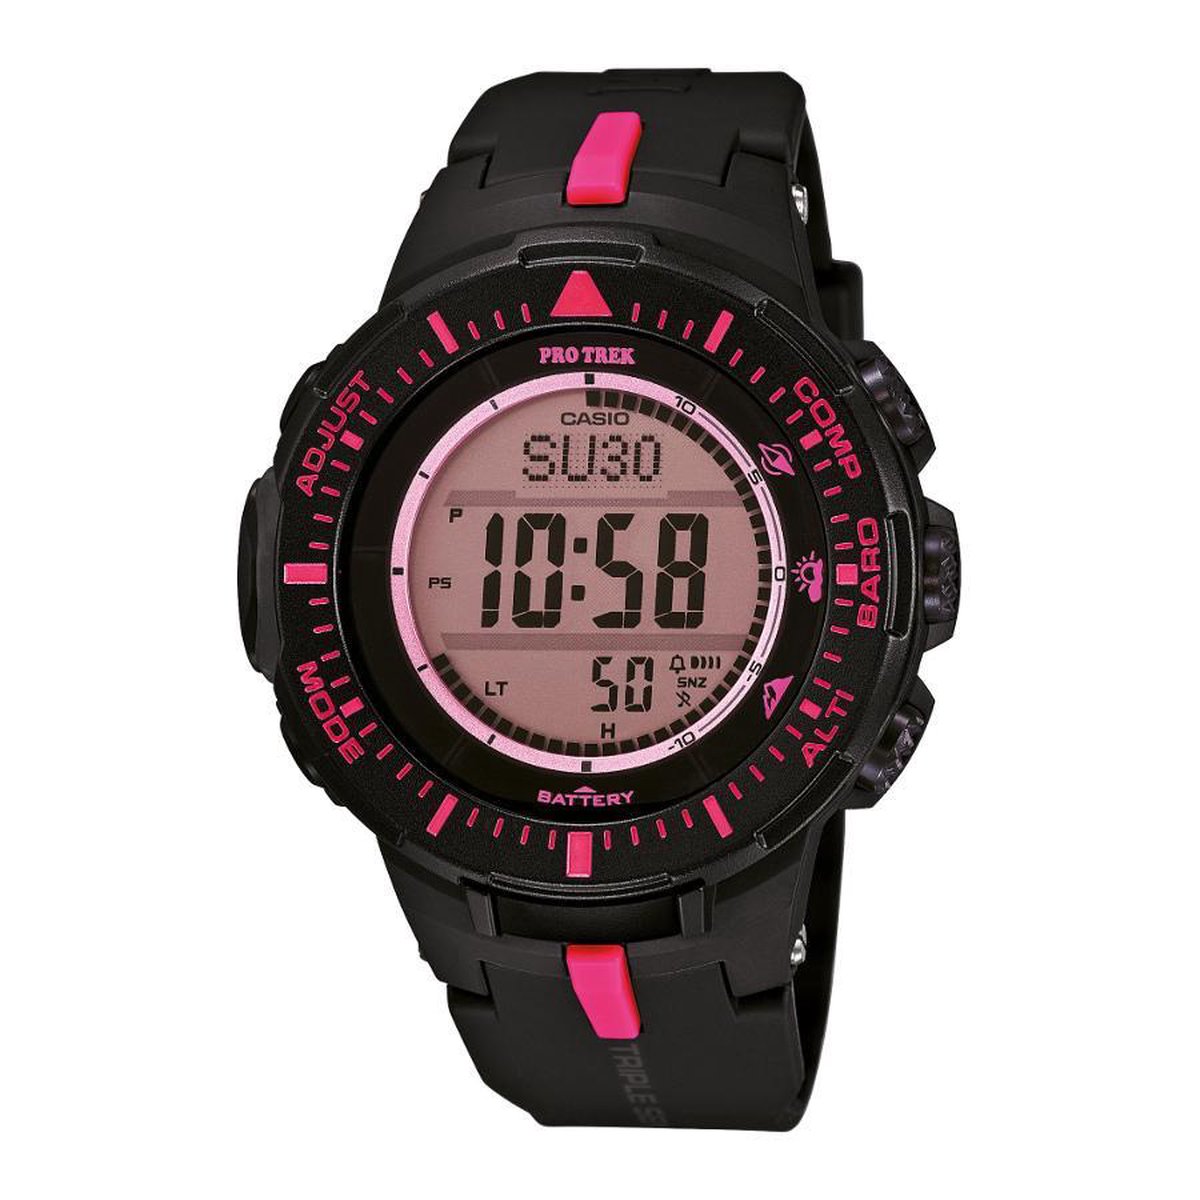 Casio Sport Pro Trek horloge PRG-300-1A4ER